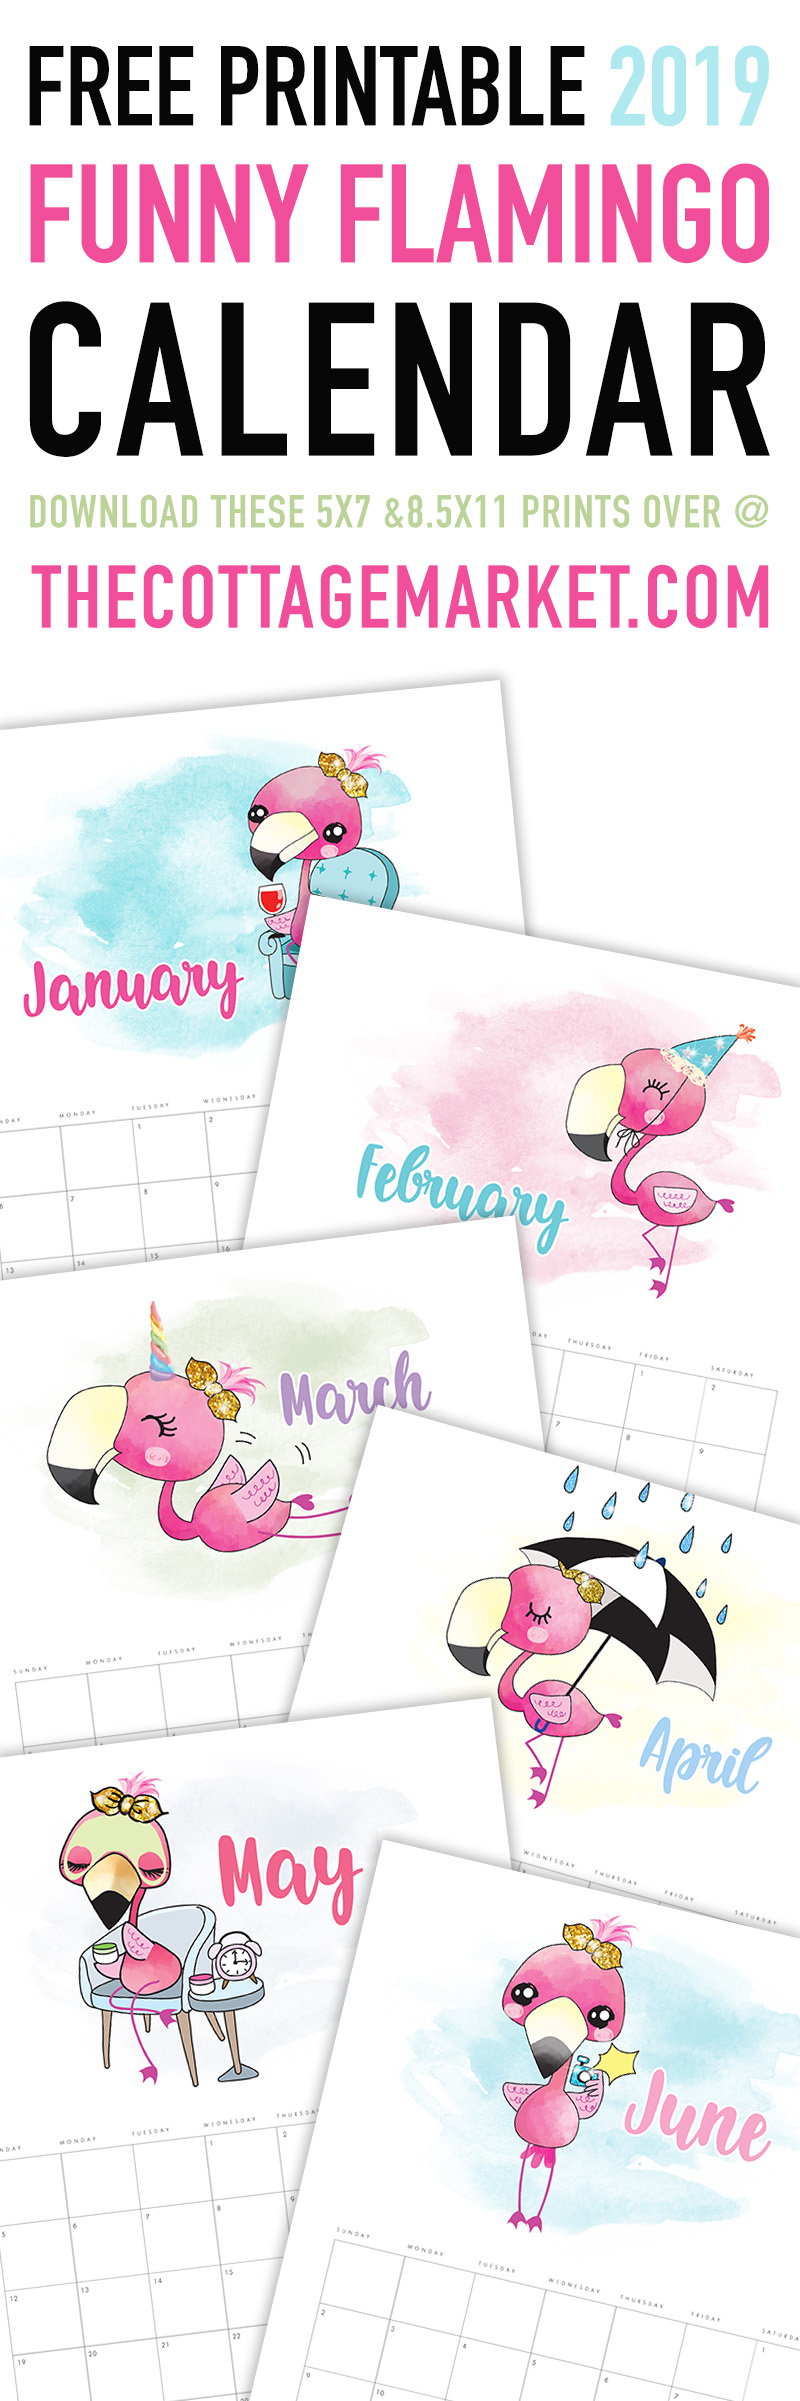 https://thecottagemarket.com/wp-content/uploads/2018/12/TCM-Flamingo-Calendar-T-1.jpg